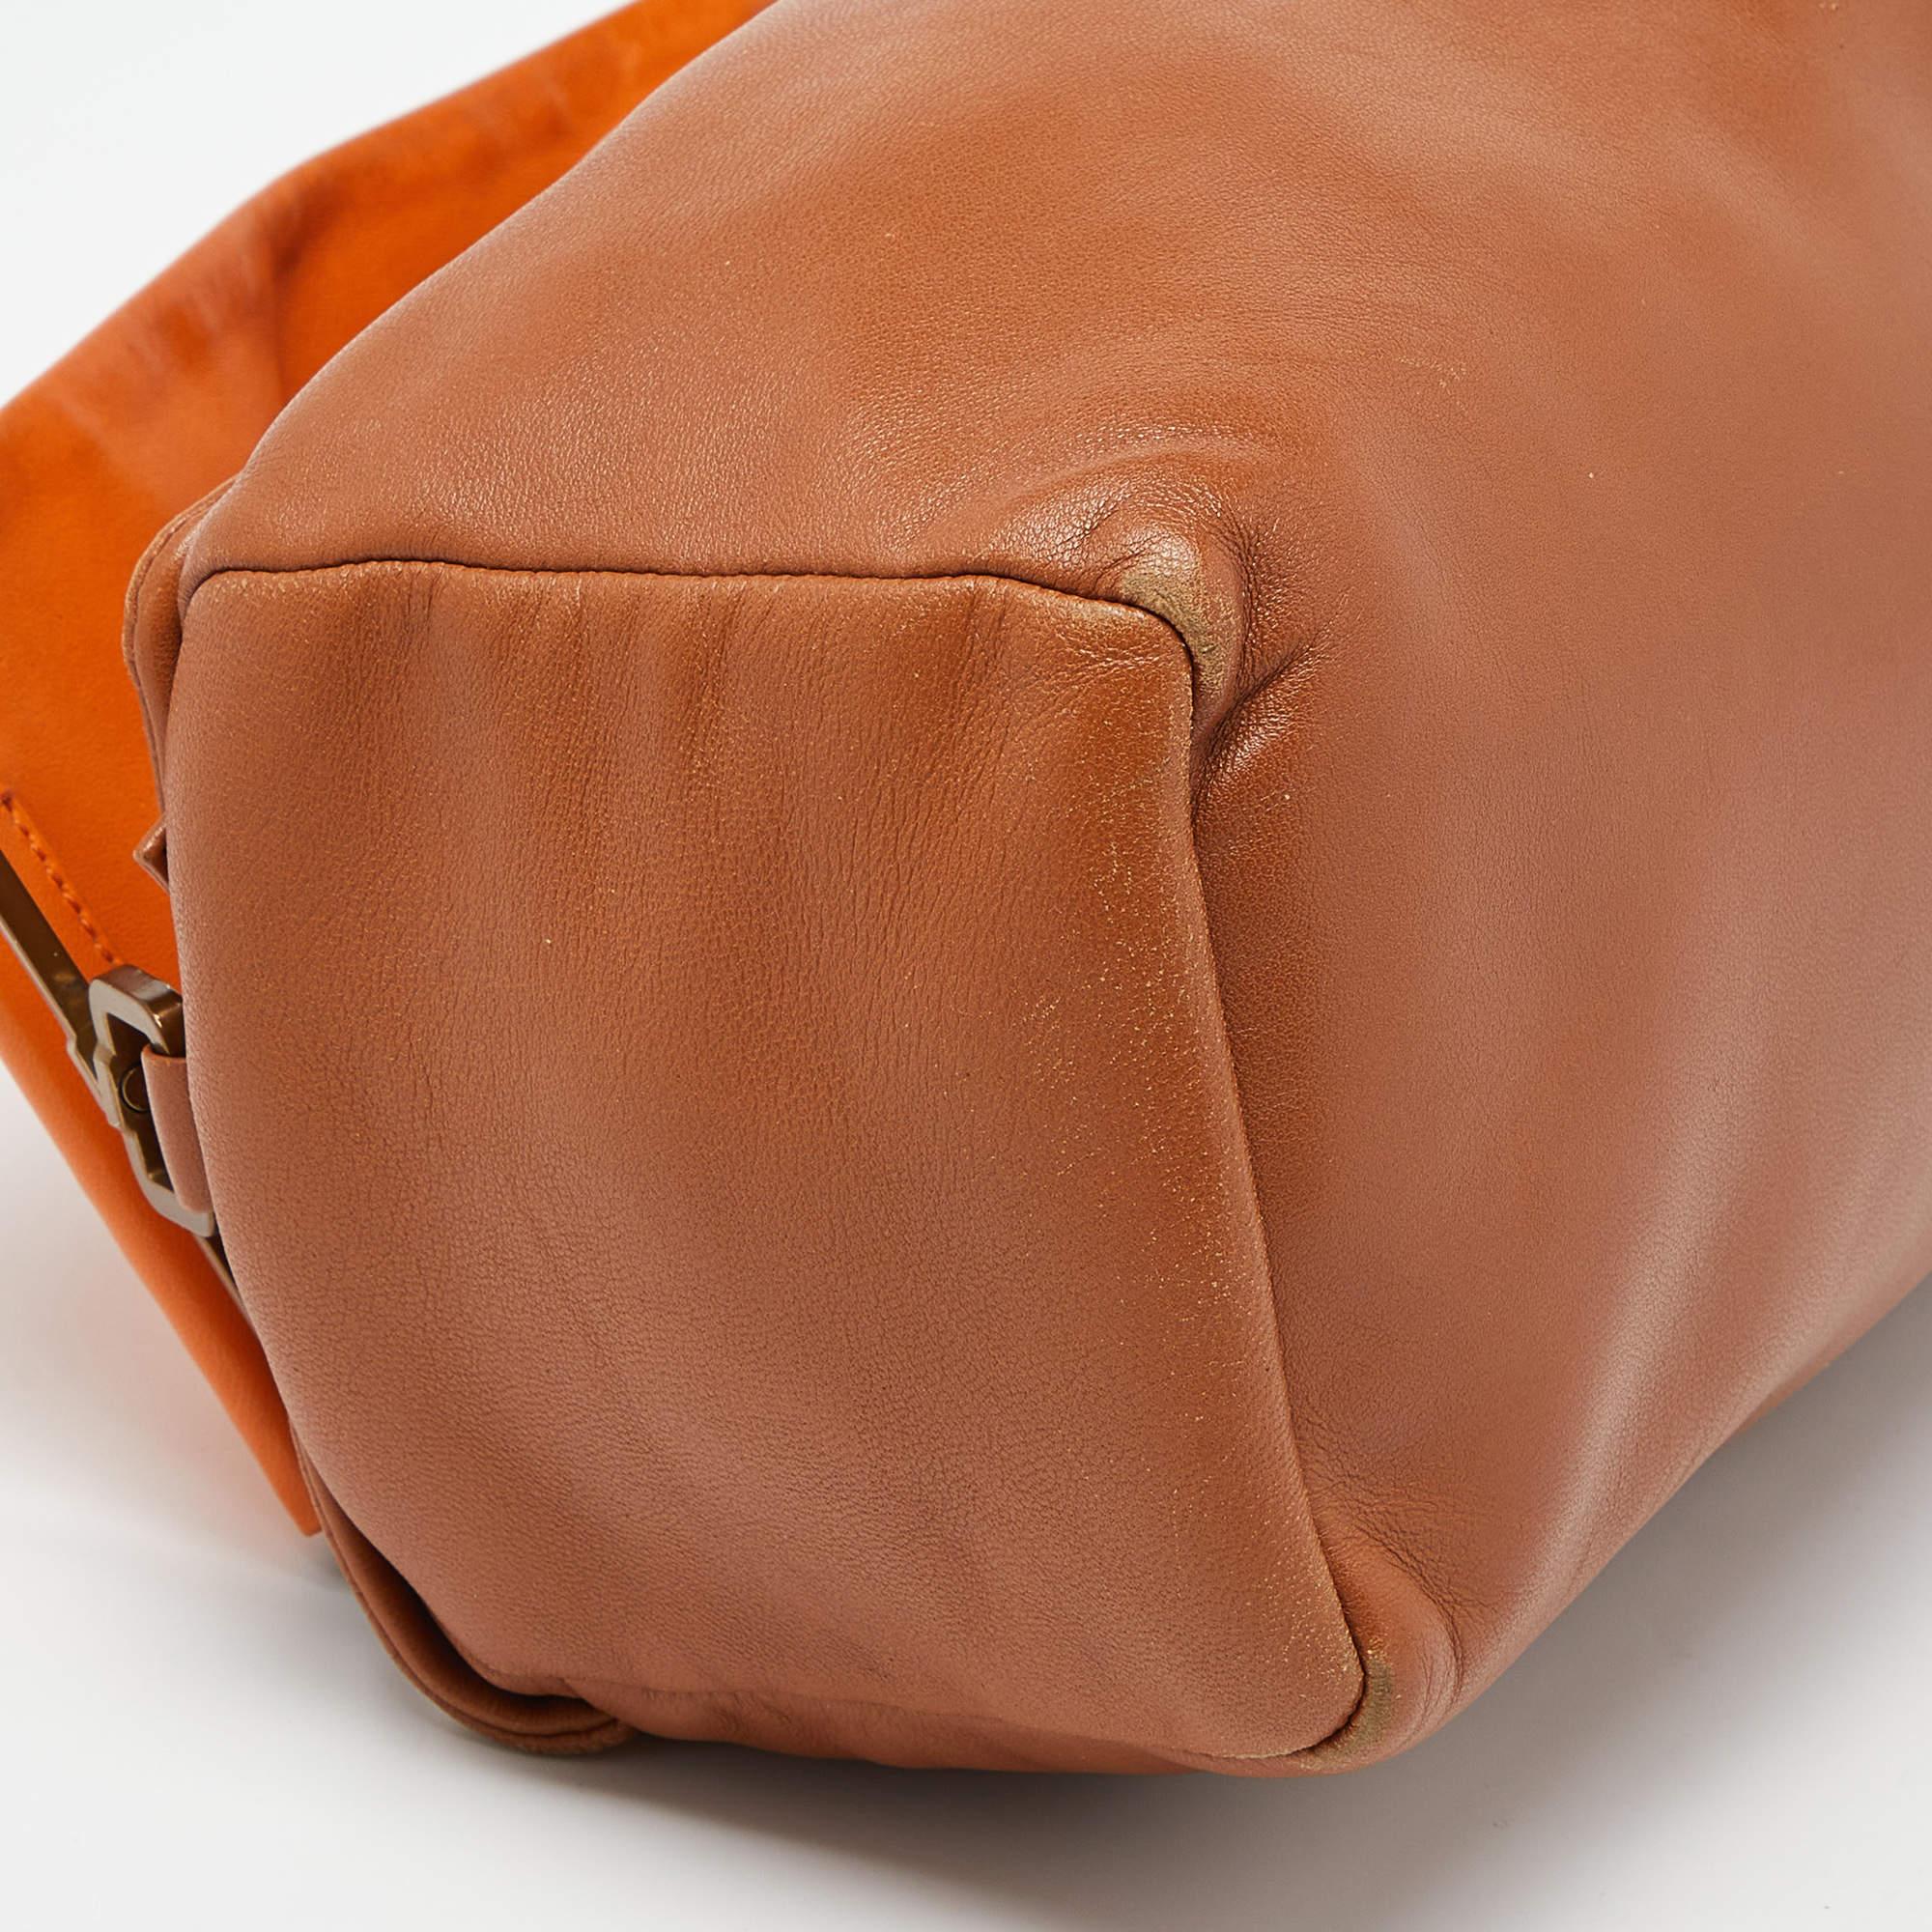 Prada Tan/Orange Leather Satchel For Sale 4